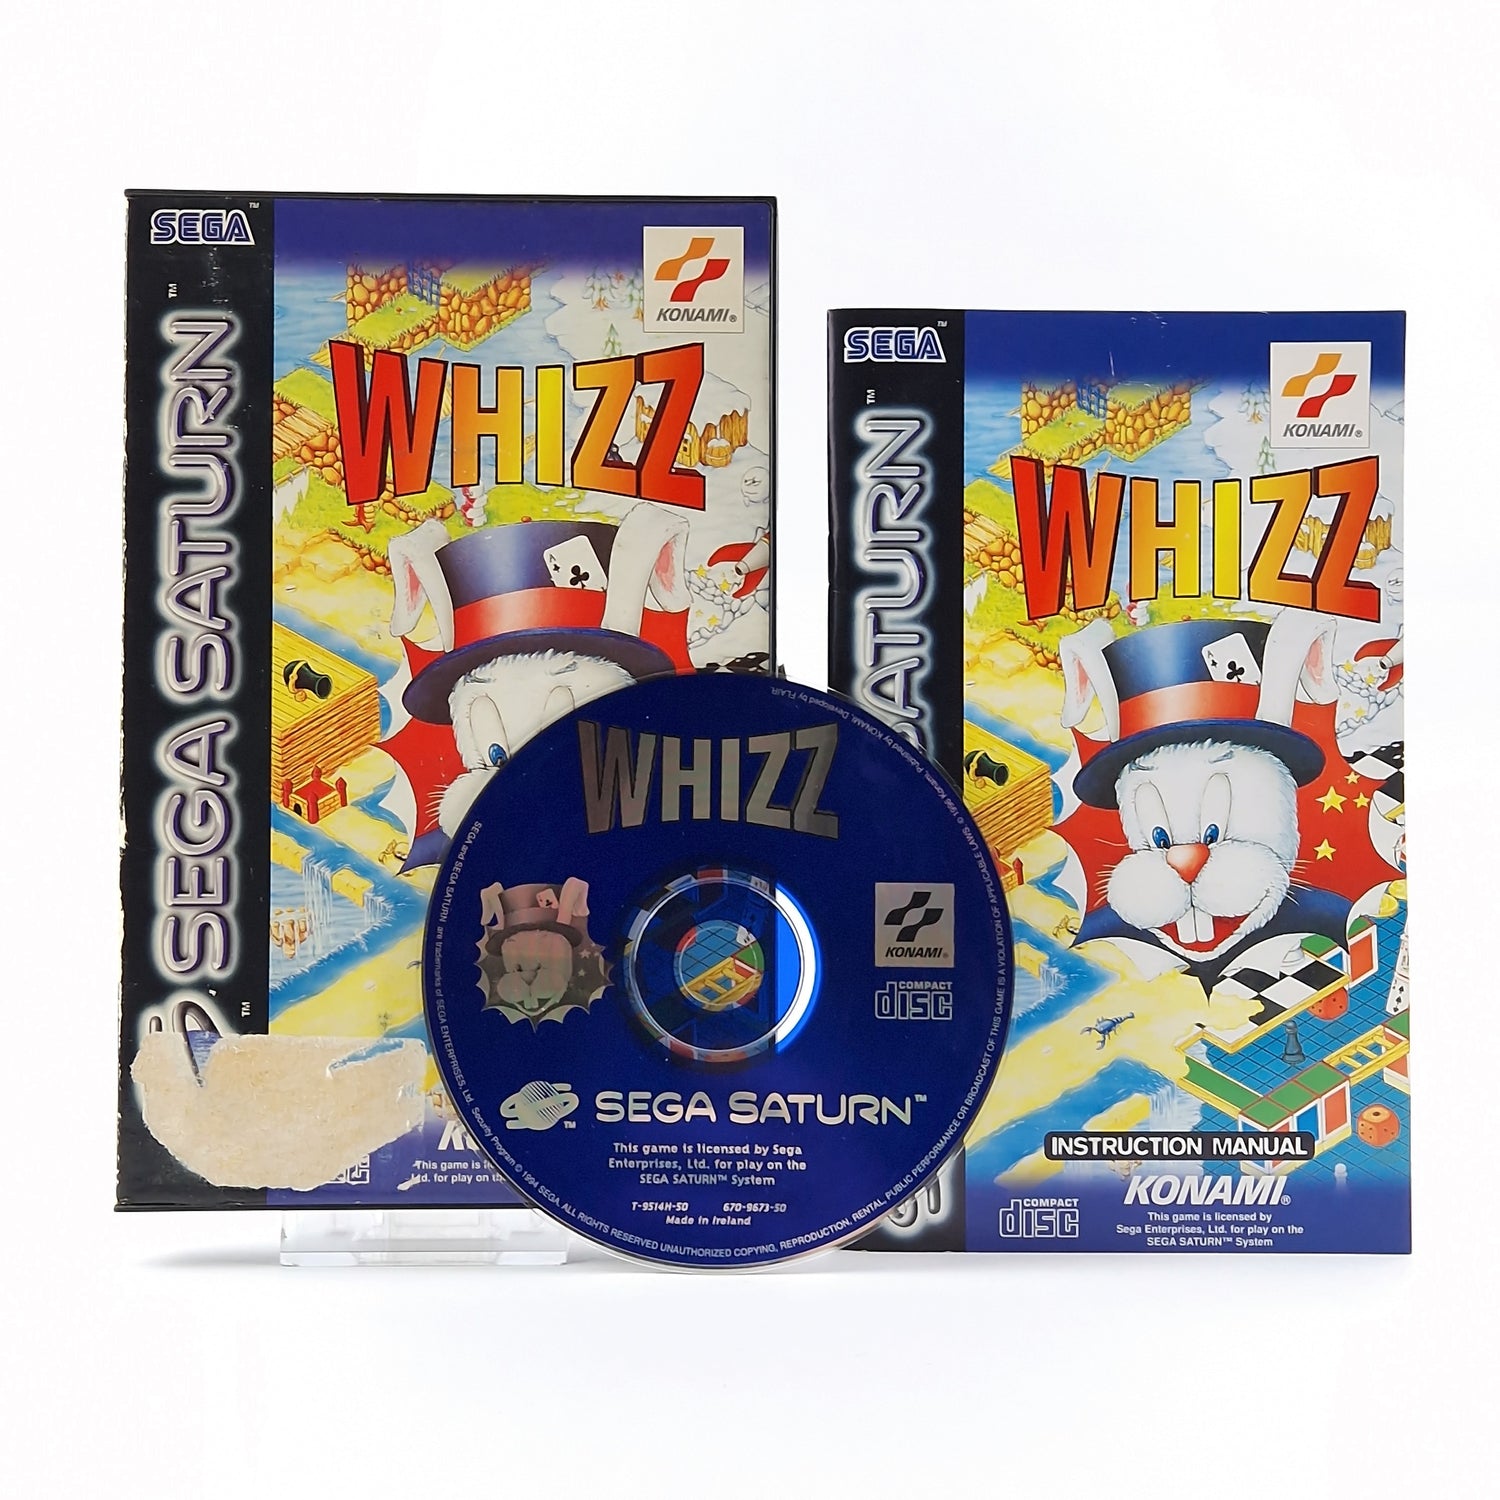 Sega Saturn Game: WHIZZ - OVP Instructions CD Disk | PAL Konami Game